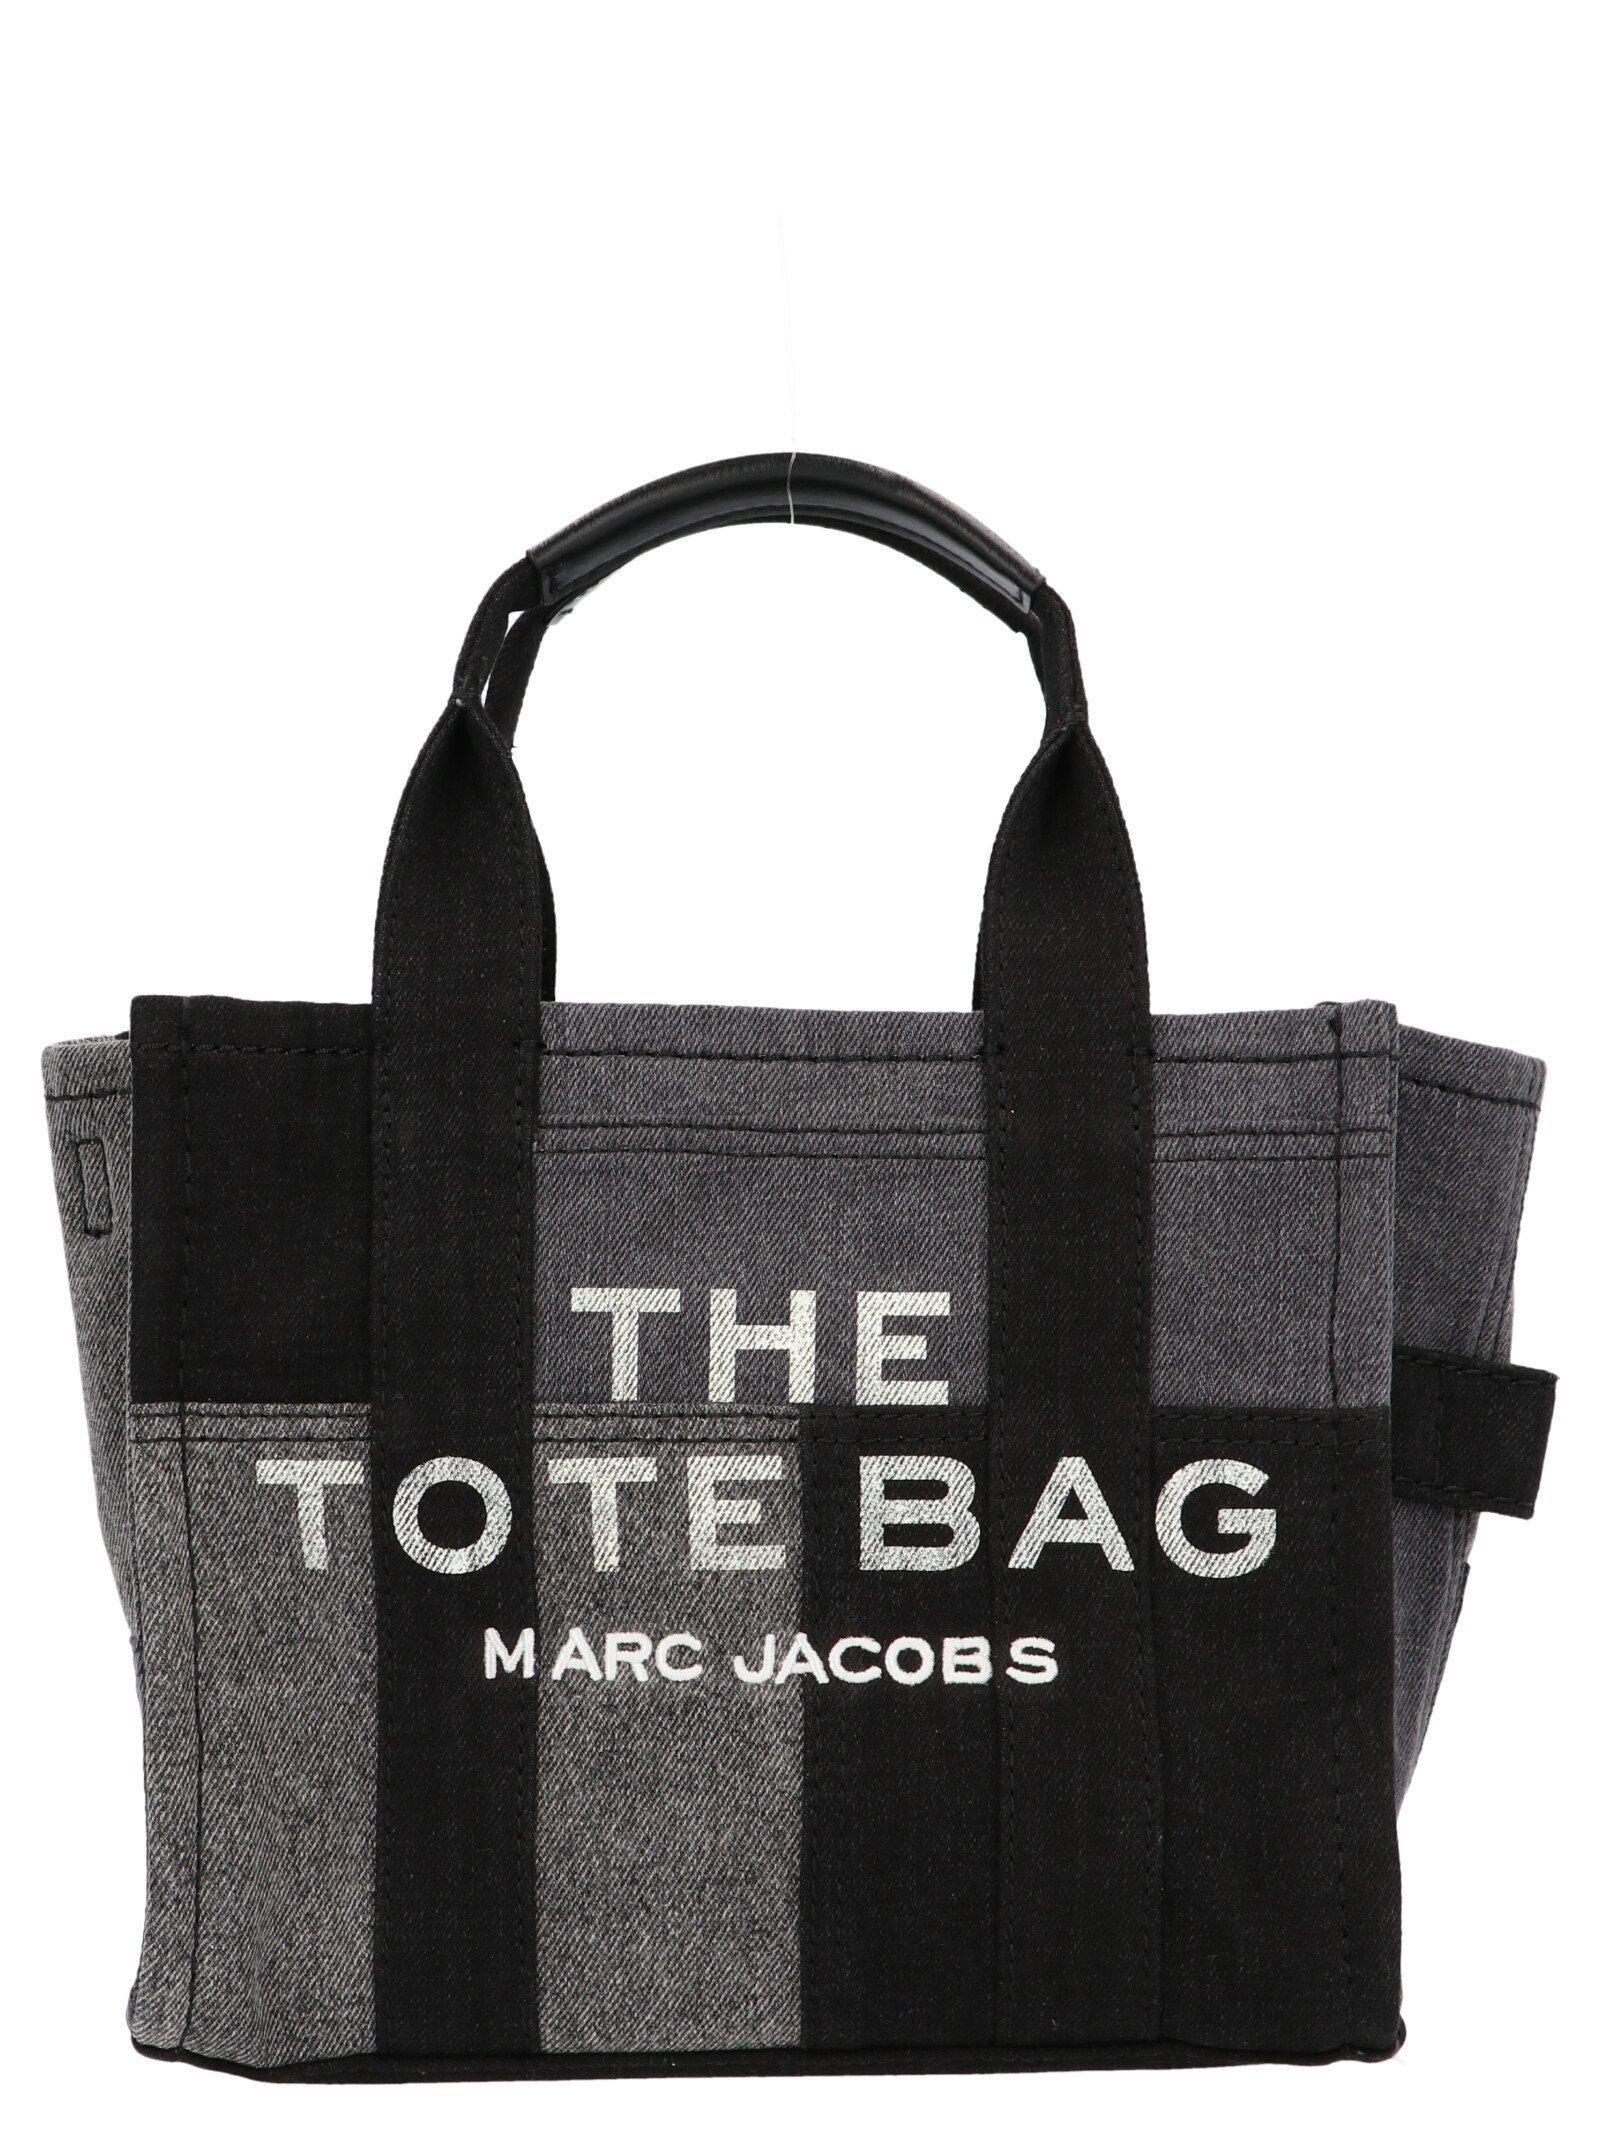 Marc Jacob's The Mini Tote Bag Black Sold Out!